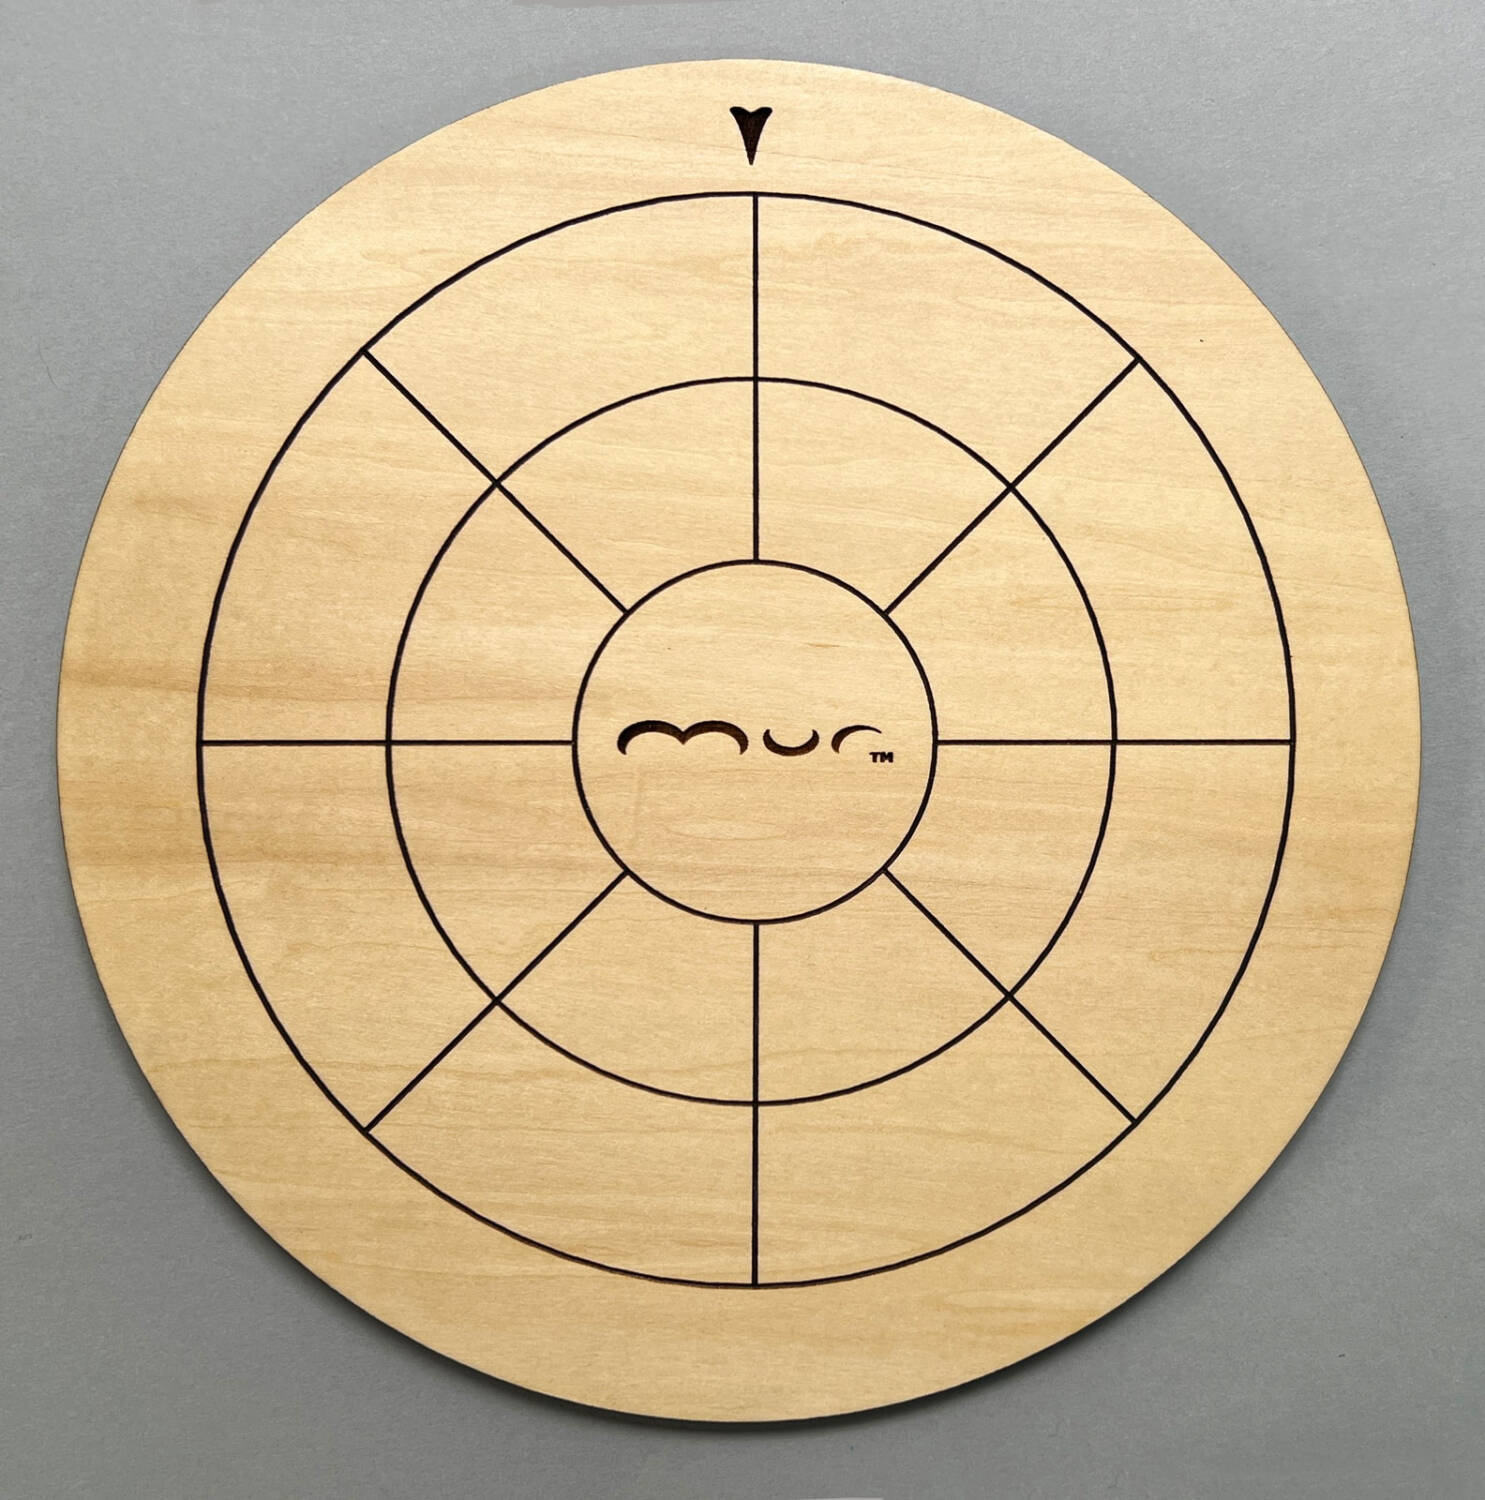 The intriguing, circular Mur board